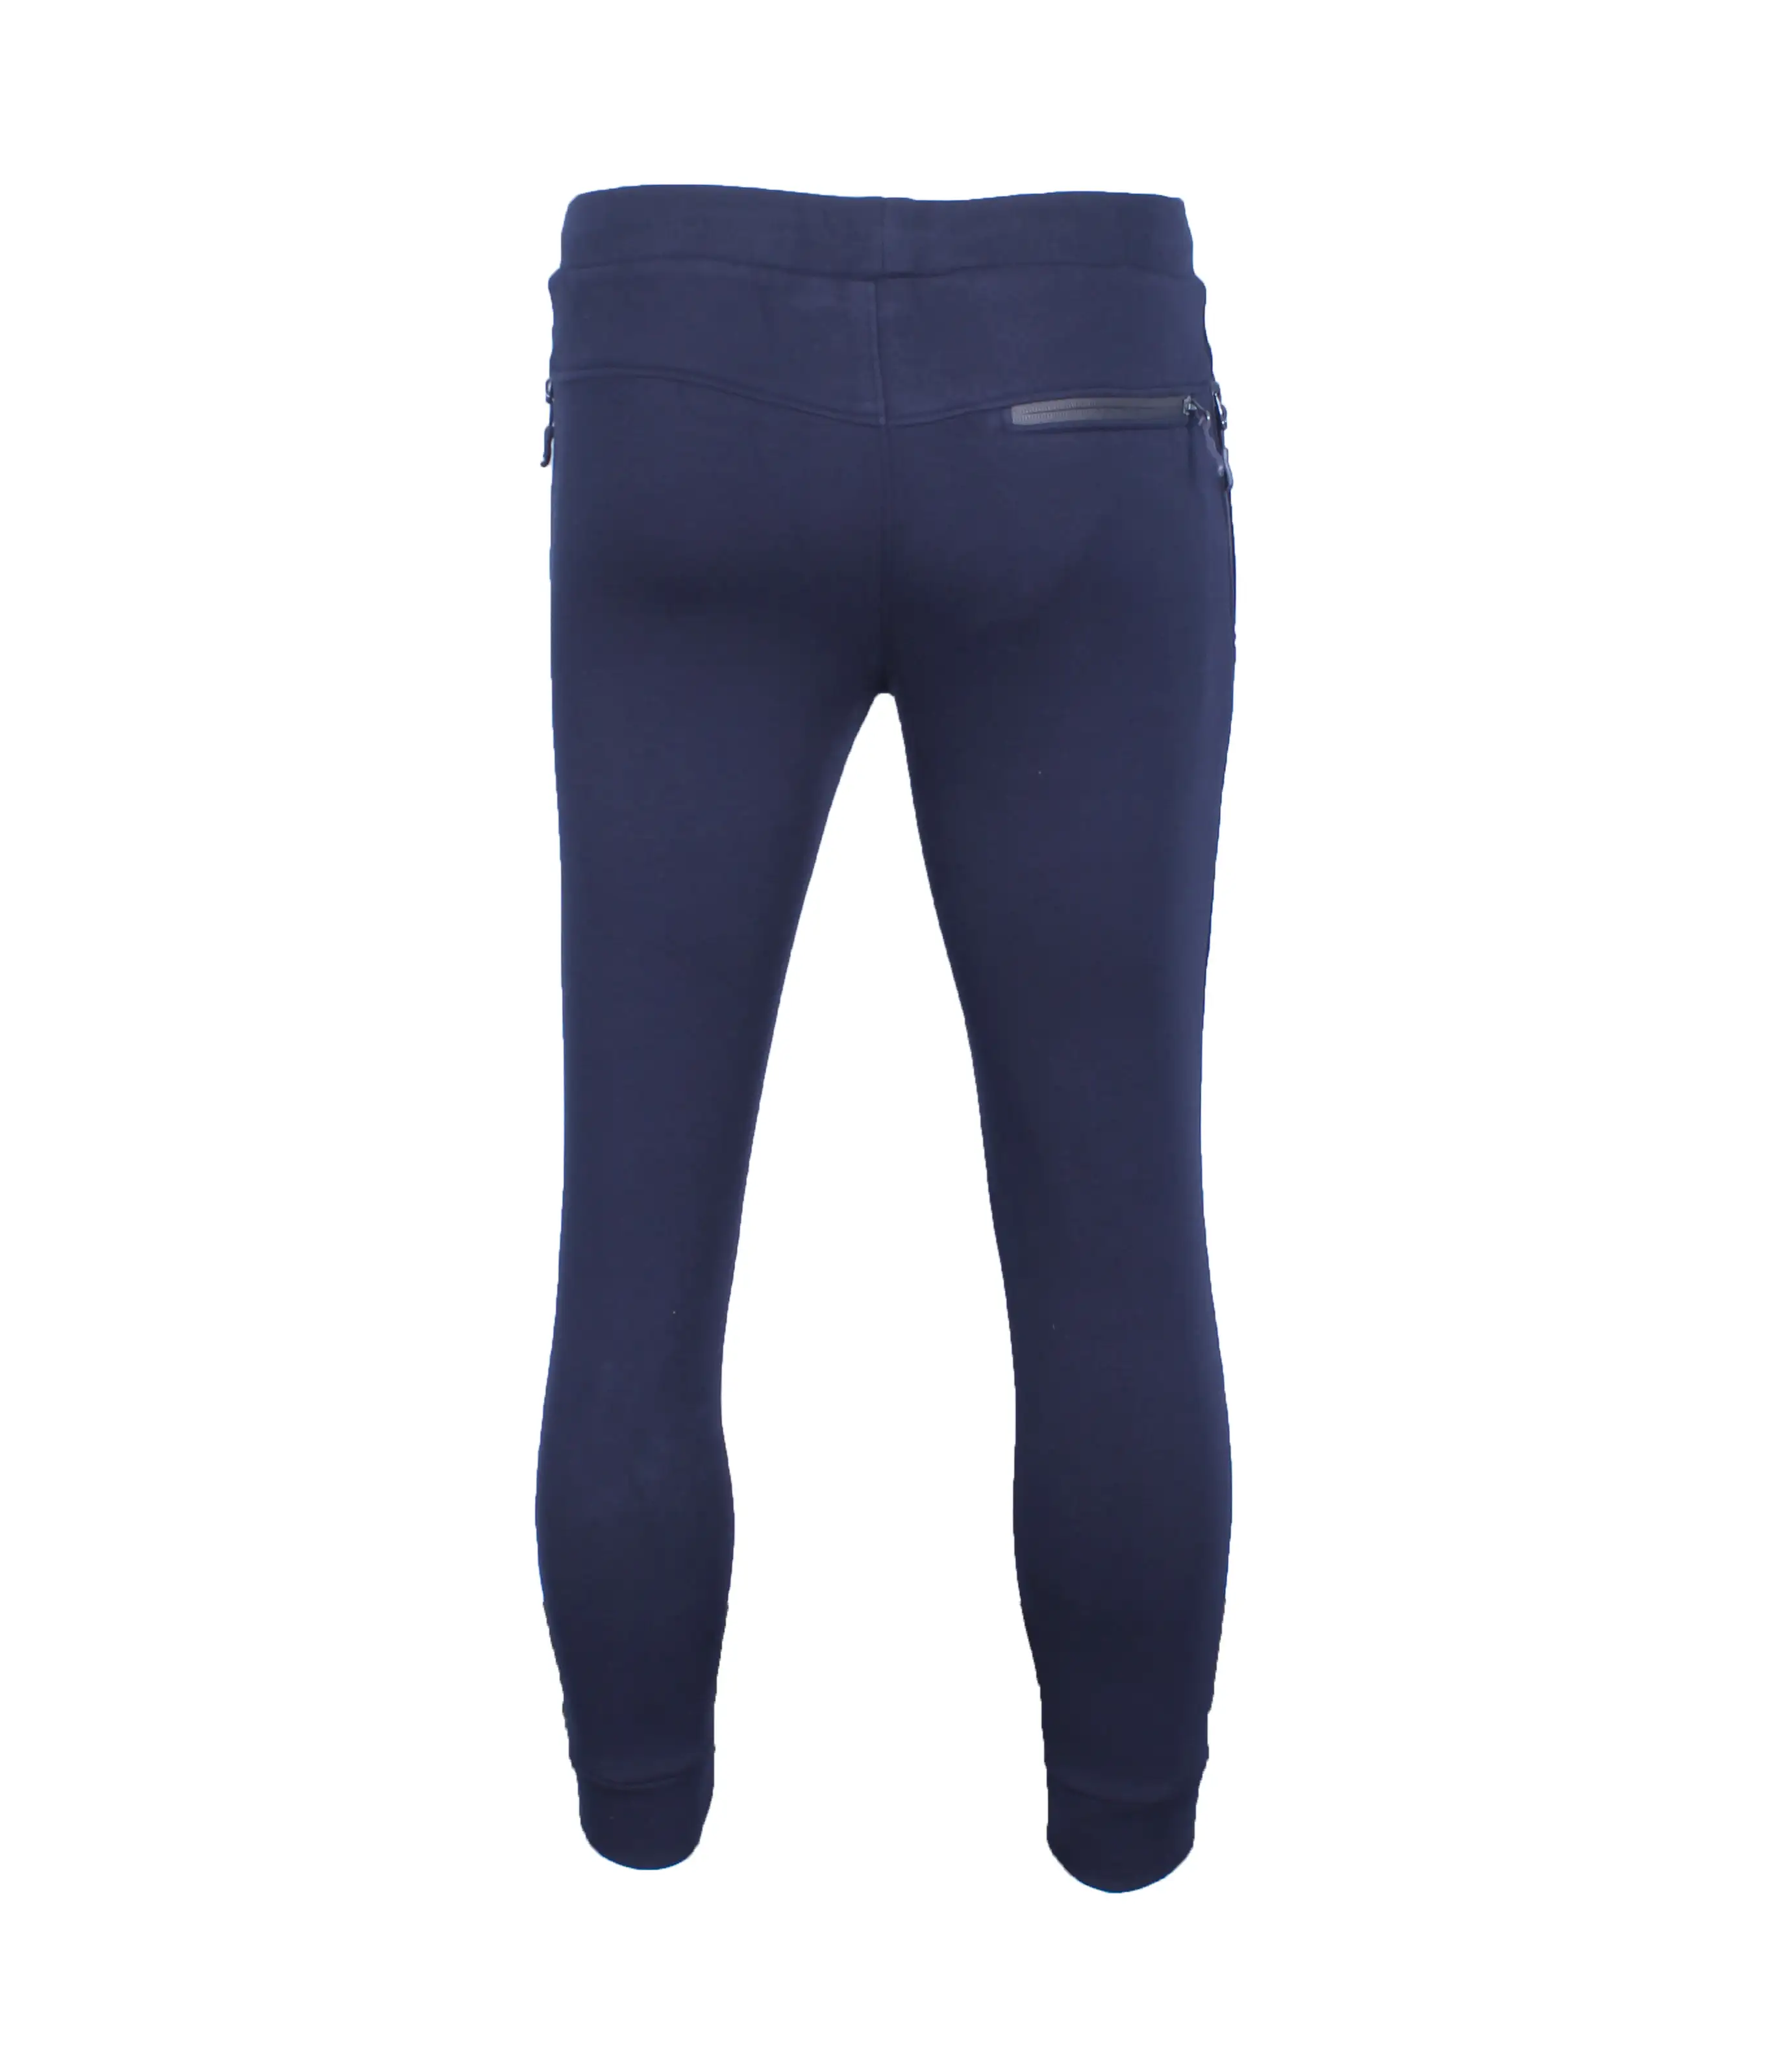 VIRJEANS ( VJC800 ) Regular Fit Denim Jeans Pant For Men